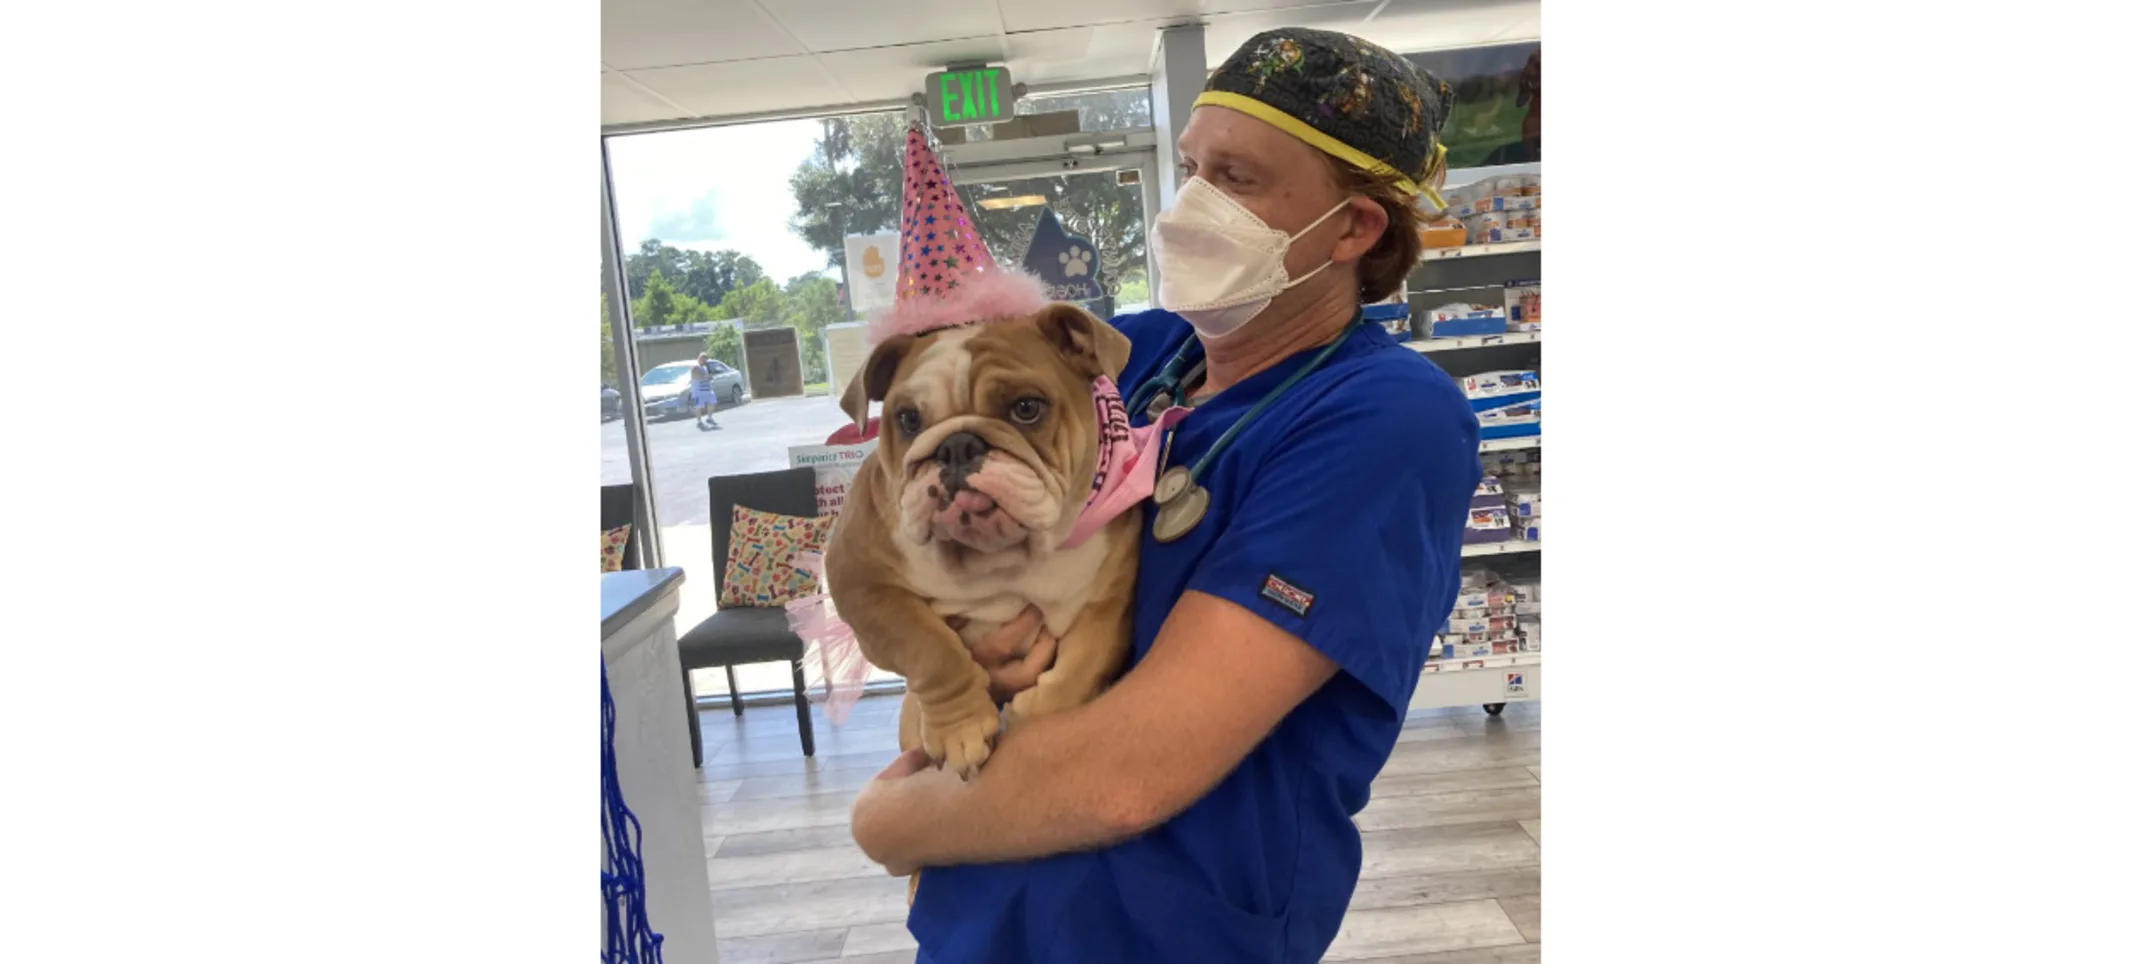 A veterinarian celebrating a dog's birthday